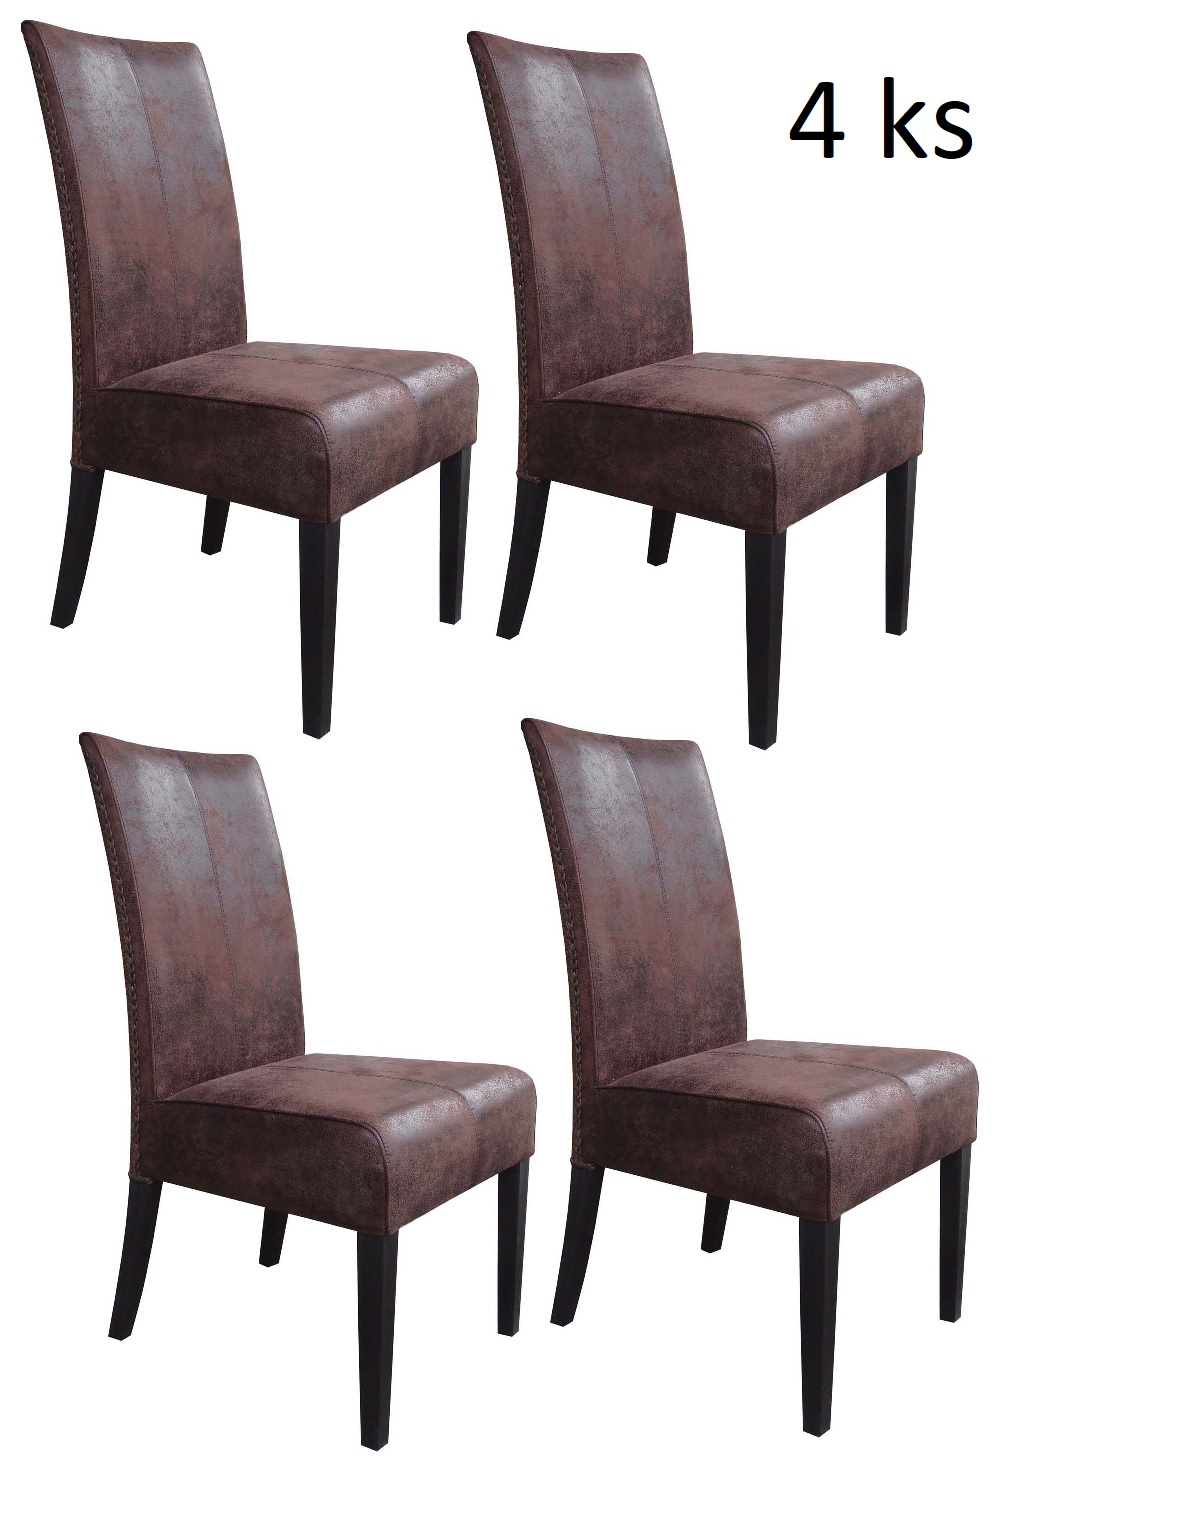 Jídelní židle CHESTER dark brown - sada 4 kusy - Masiv